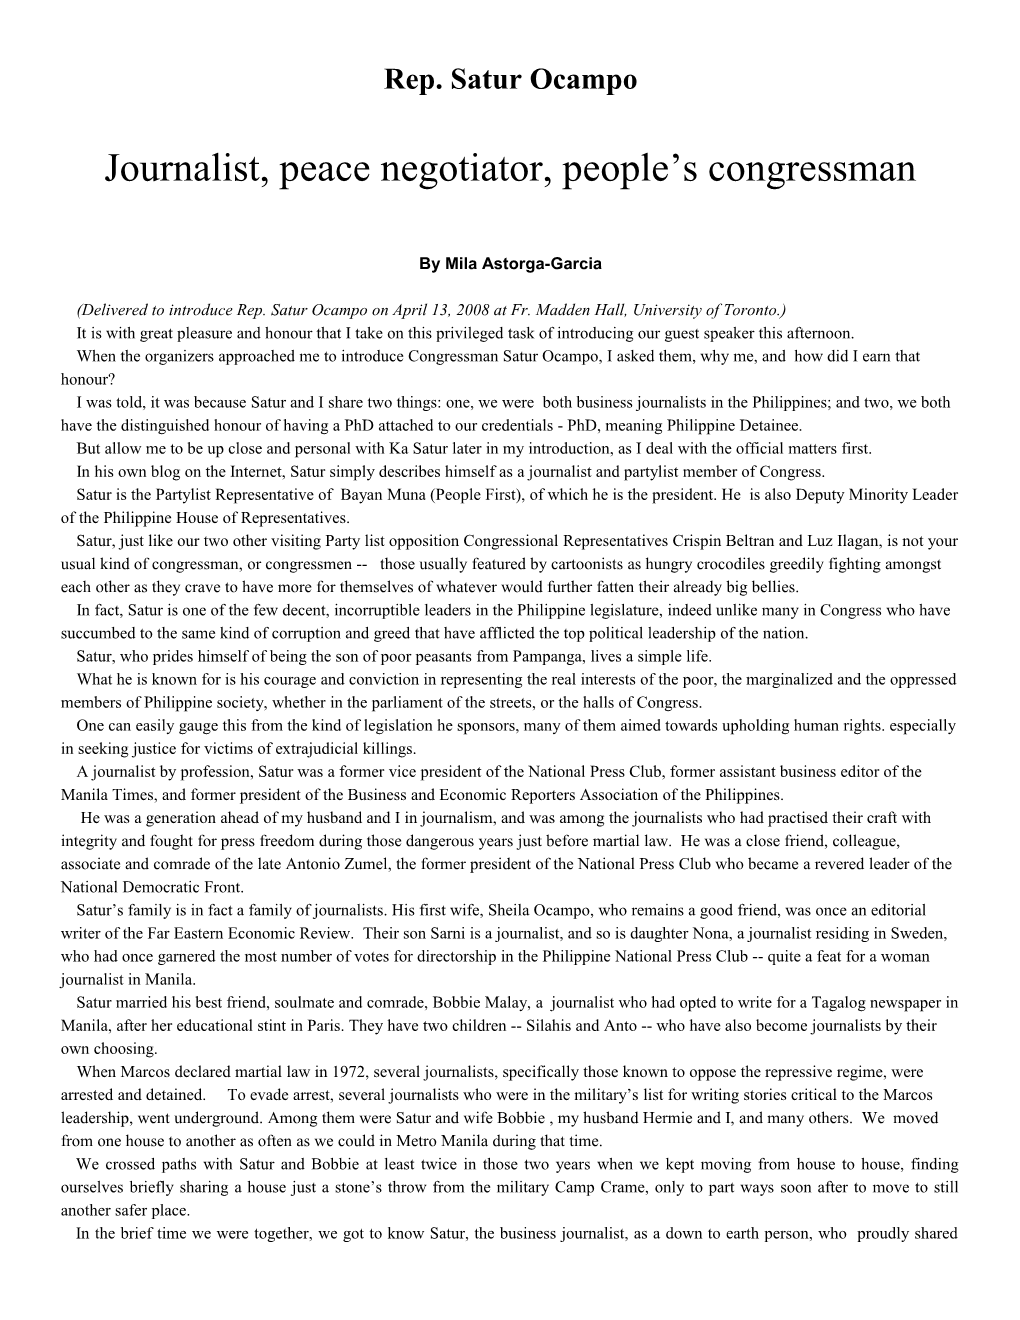 Journalist, Peace Negotiator, People S Congressman